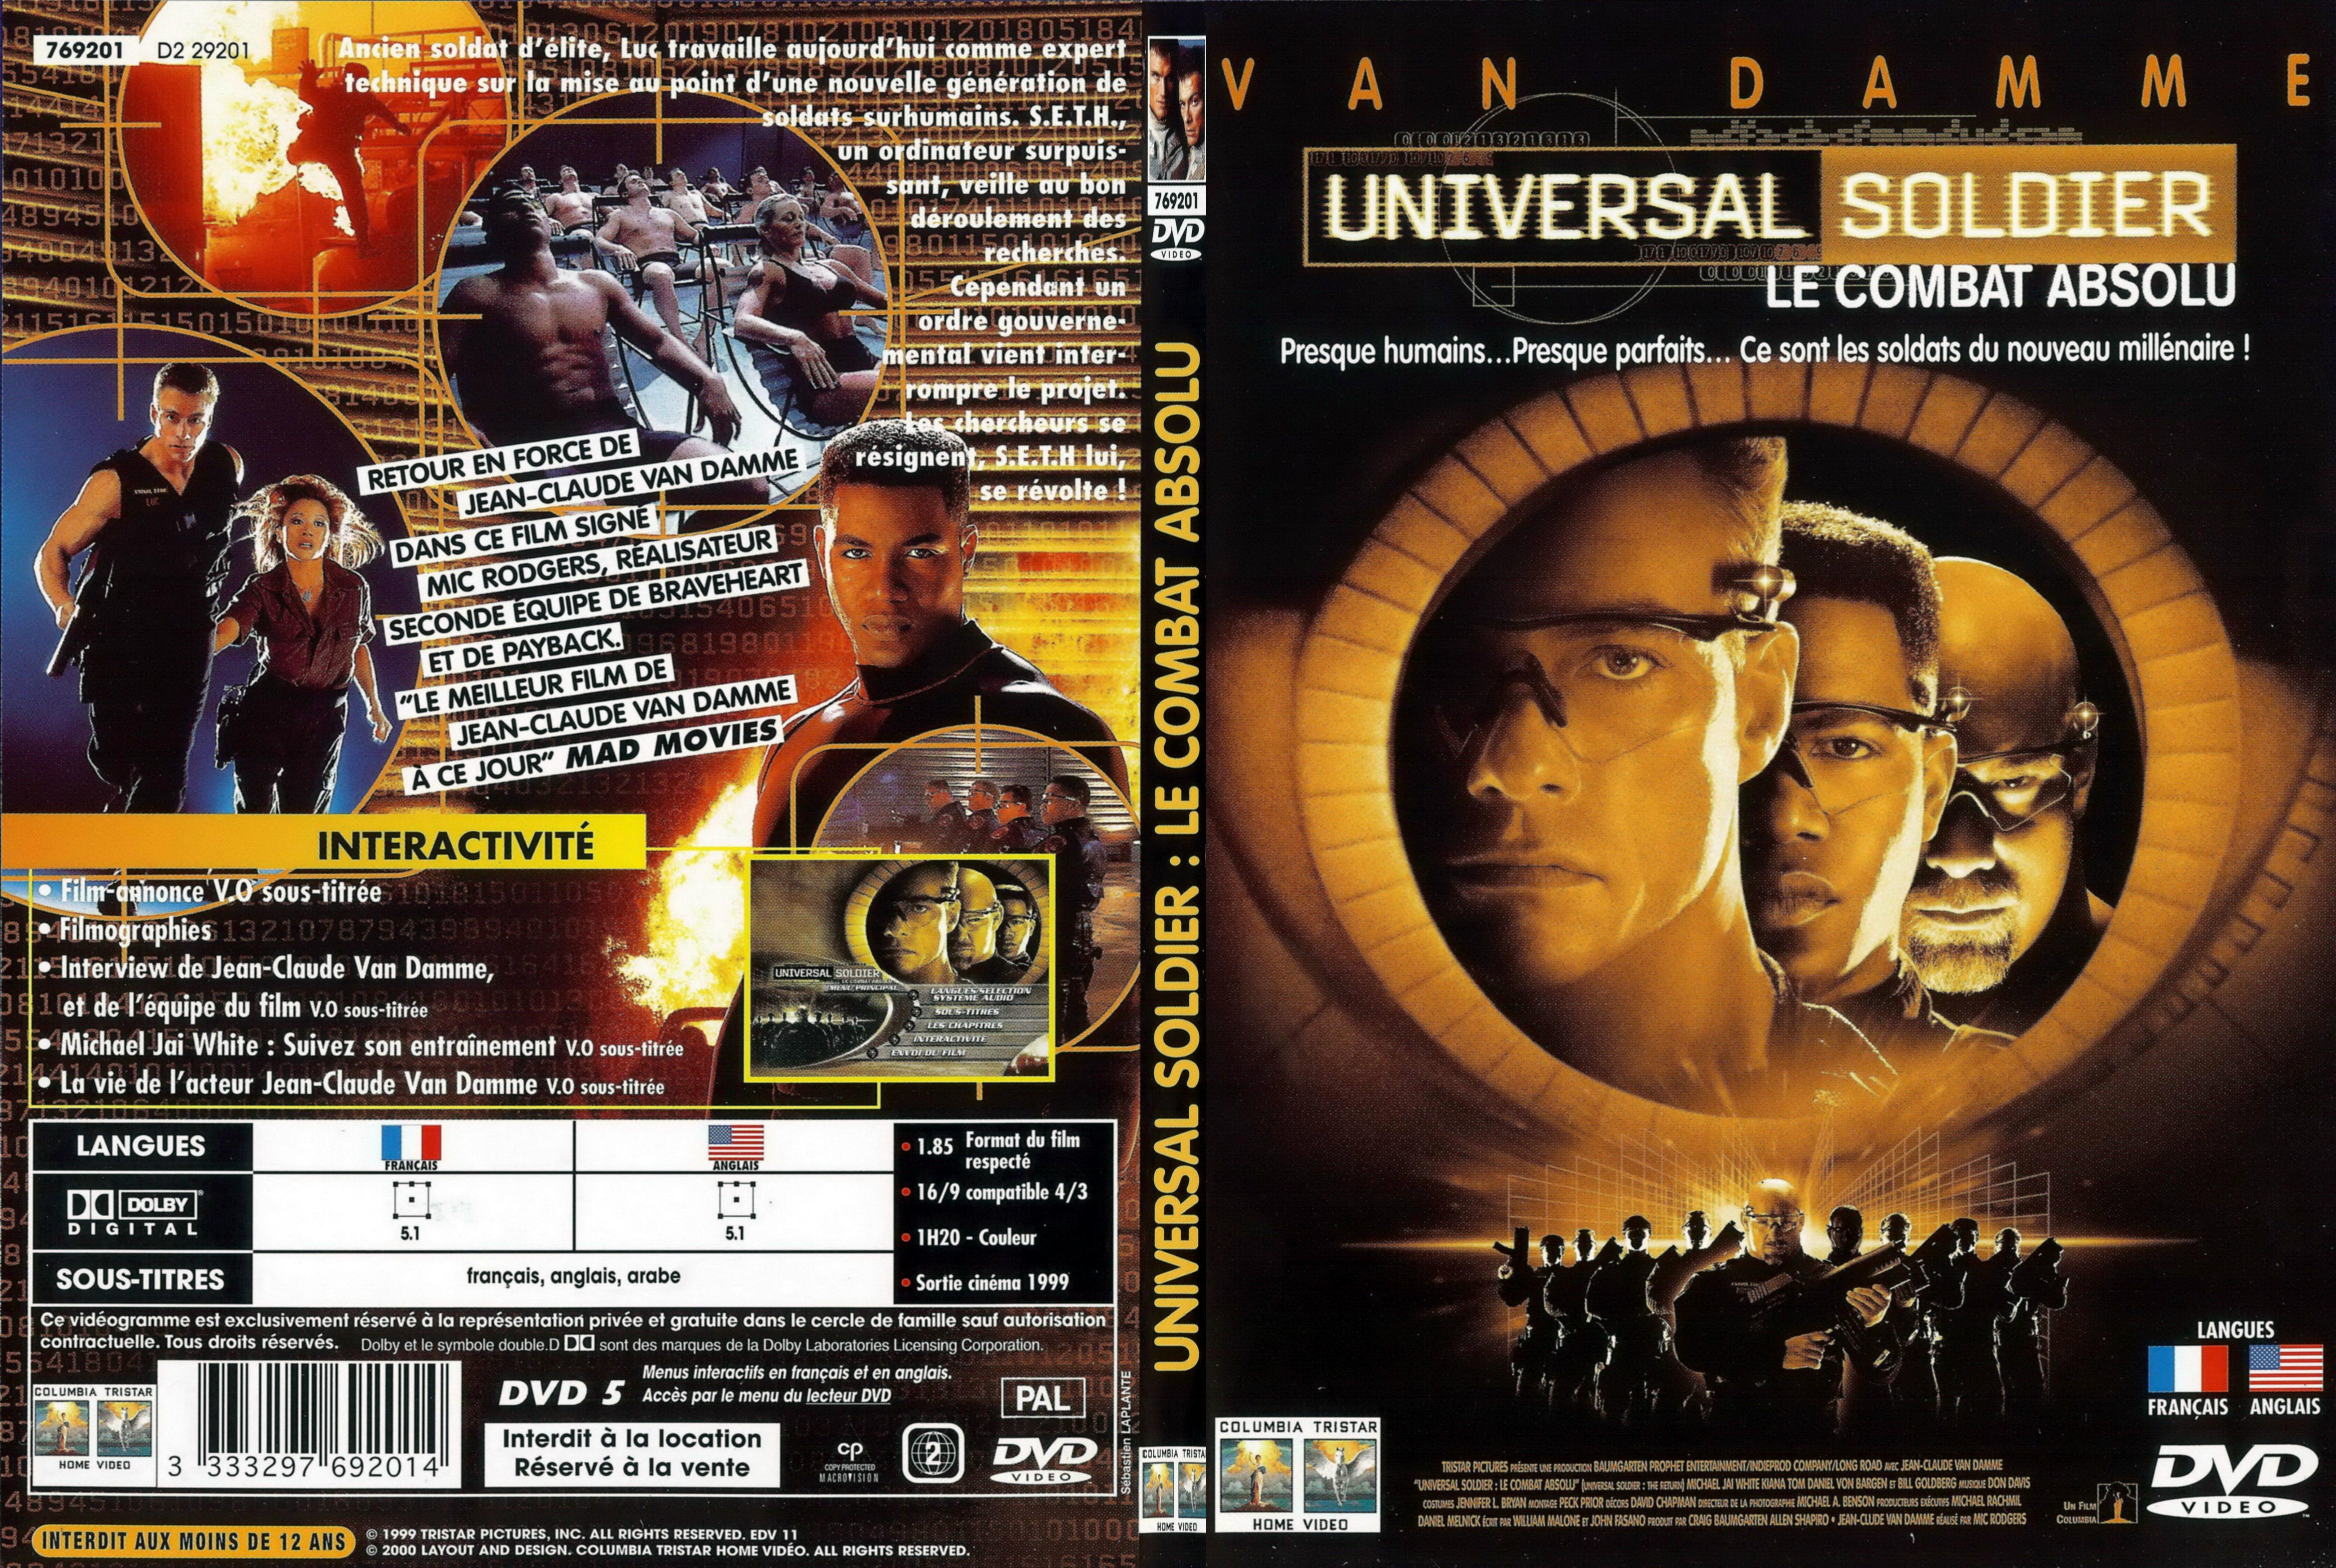 Jaquette DVD Universal soldier le combat absolu - SLIM